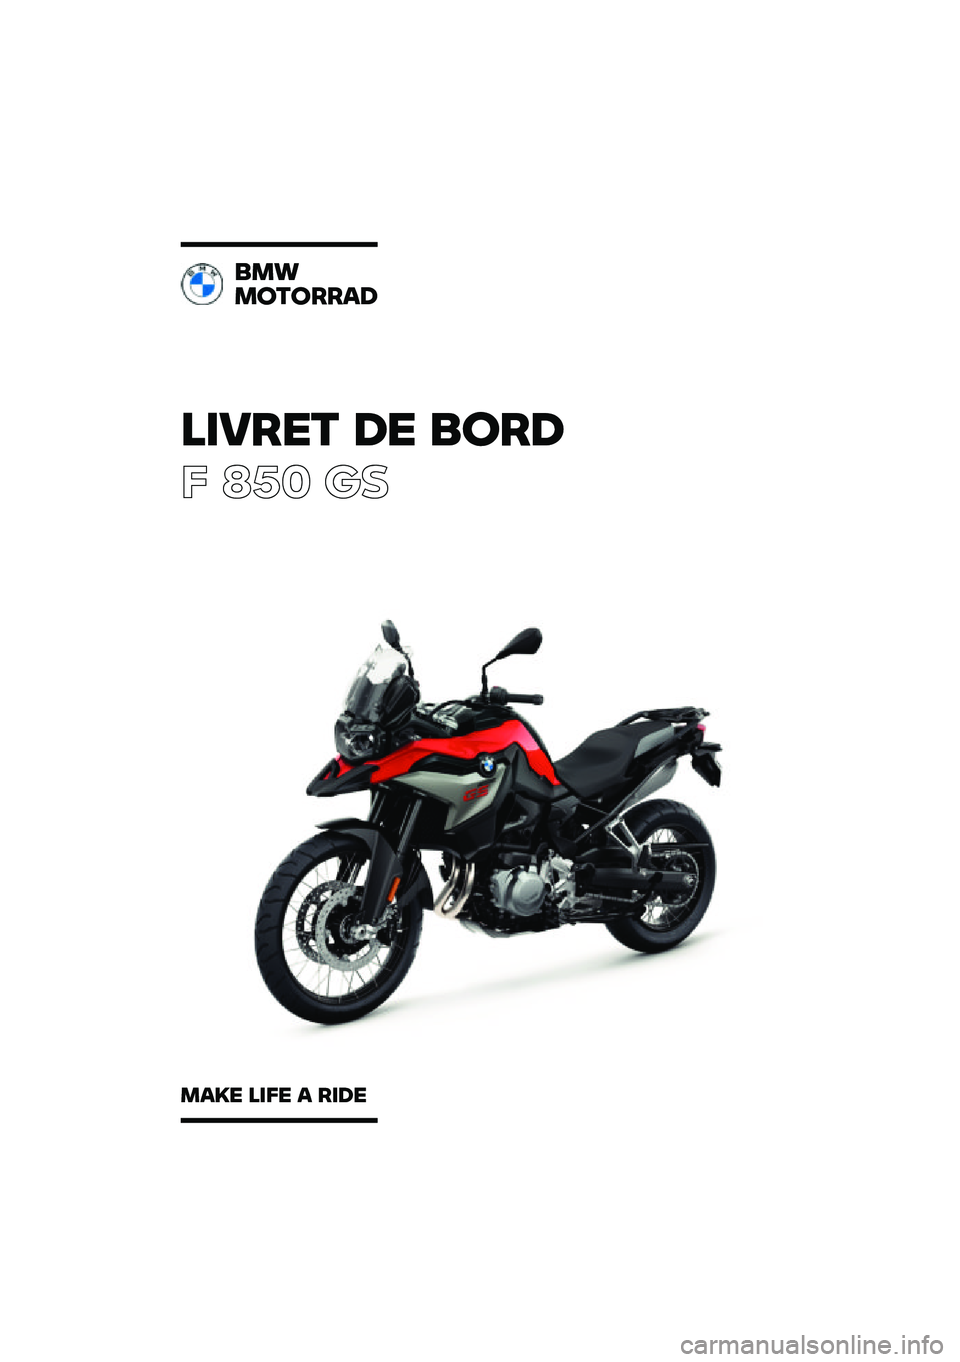 BMW MOTORRAD F 850 GS 2021  Livret de bord (in French) ������ �\b� �	�
��\b
� ��� �	�

�	��\f
��
��
���
�\b
��
�� ���� �
 ���\b� 